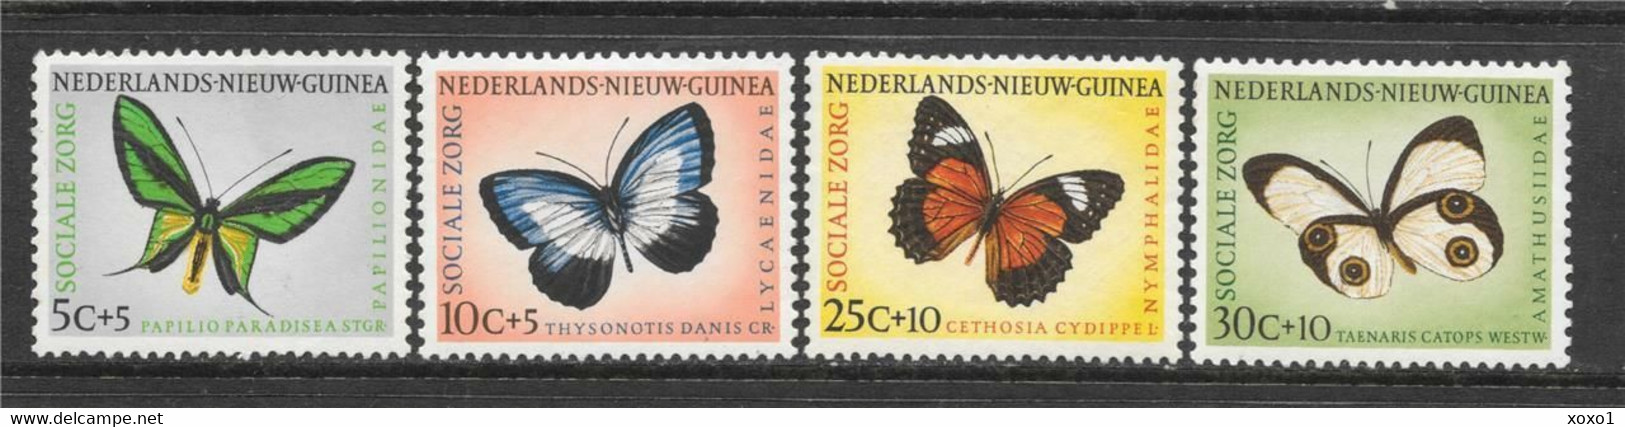 Netherlands New Guinea 1960 Niederländisch-Neuguinea  MiNr. 63 - 66 Butterflies Insects 4v 1960 MNH** 5,50 € - Nederlands Nieuw-Guinea